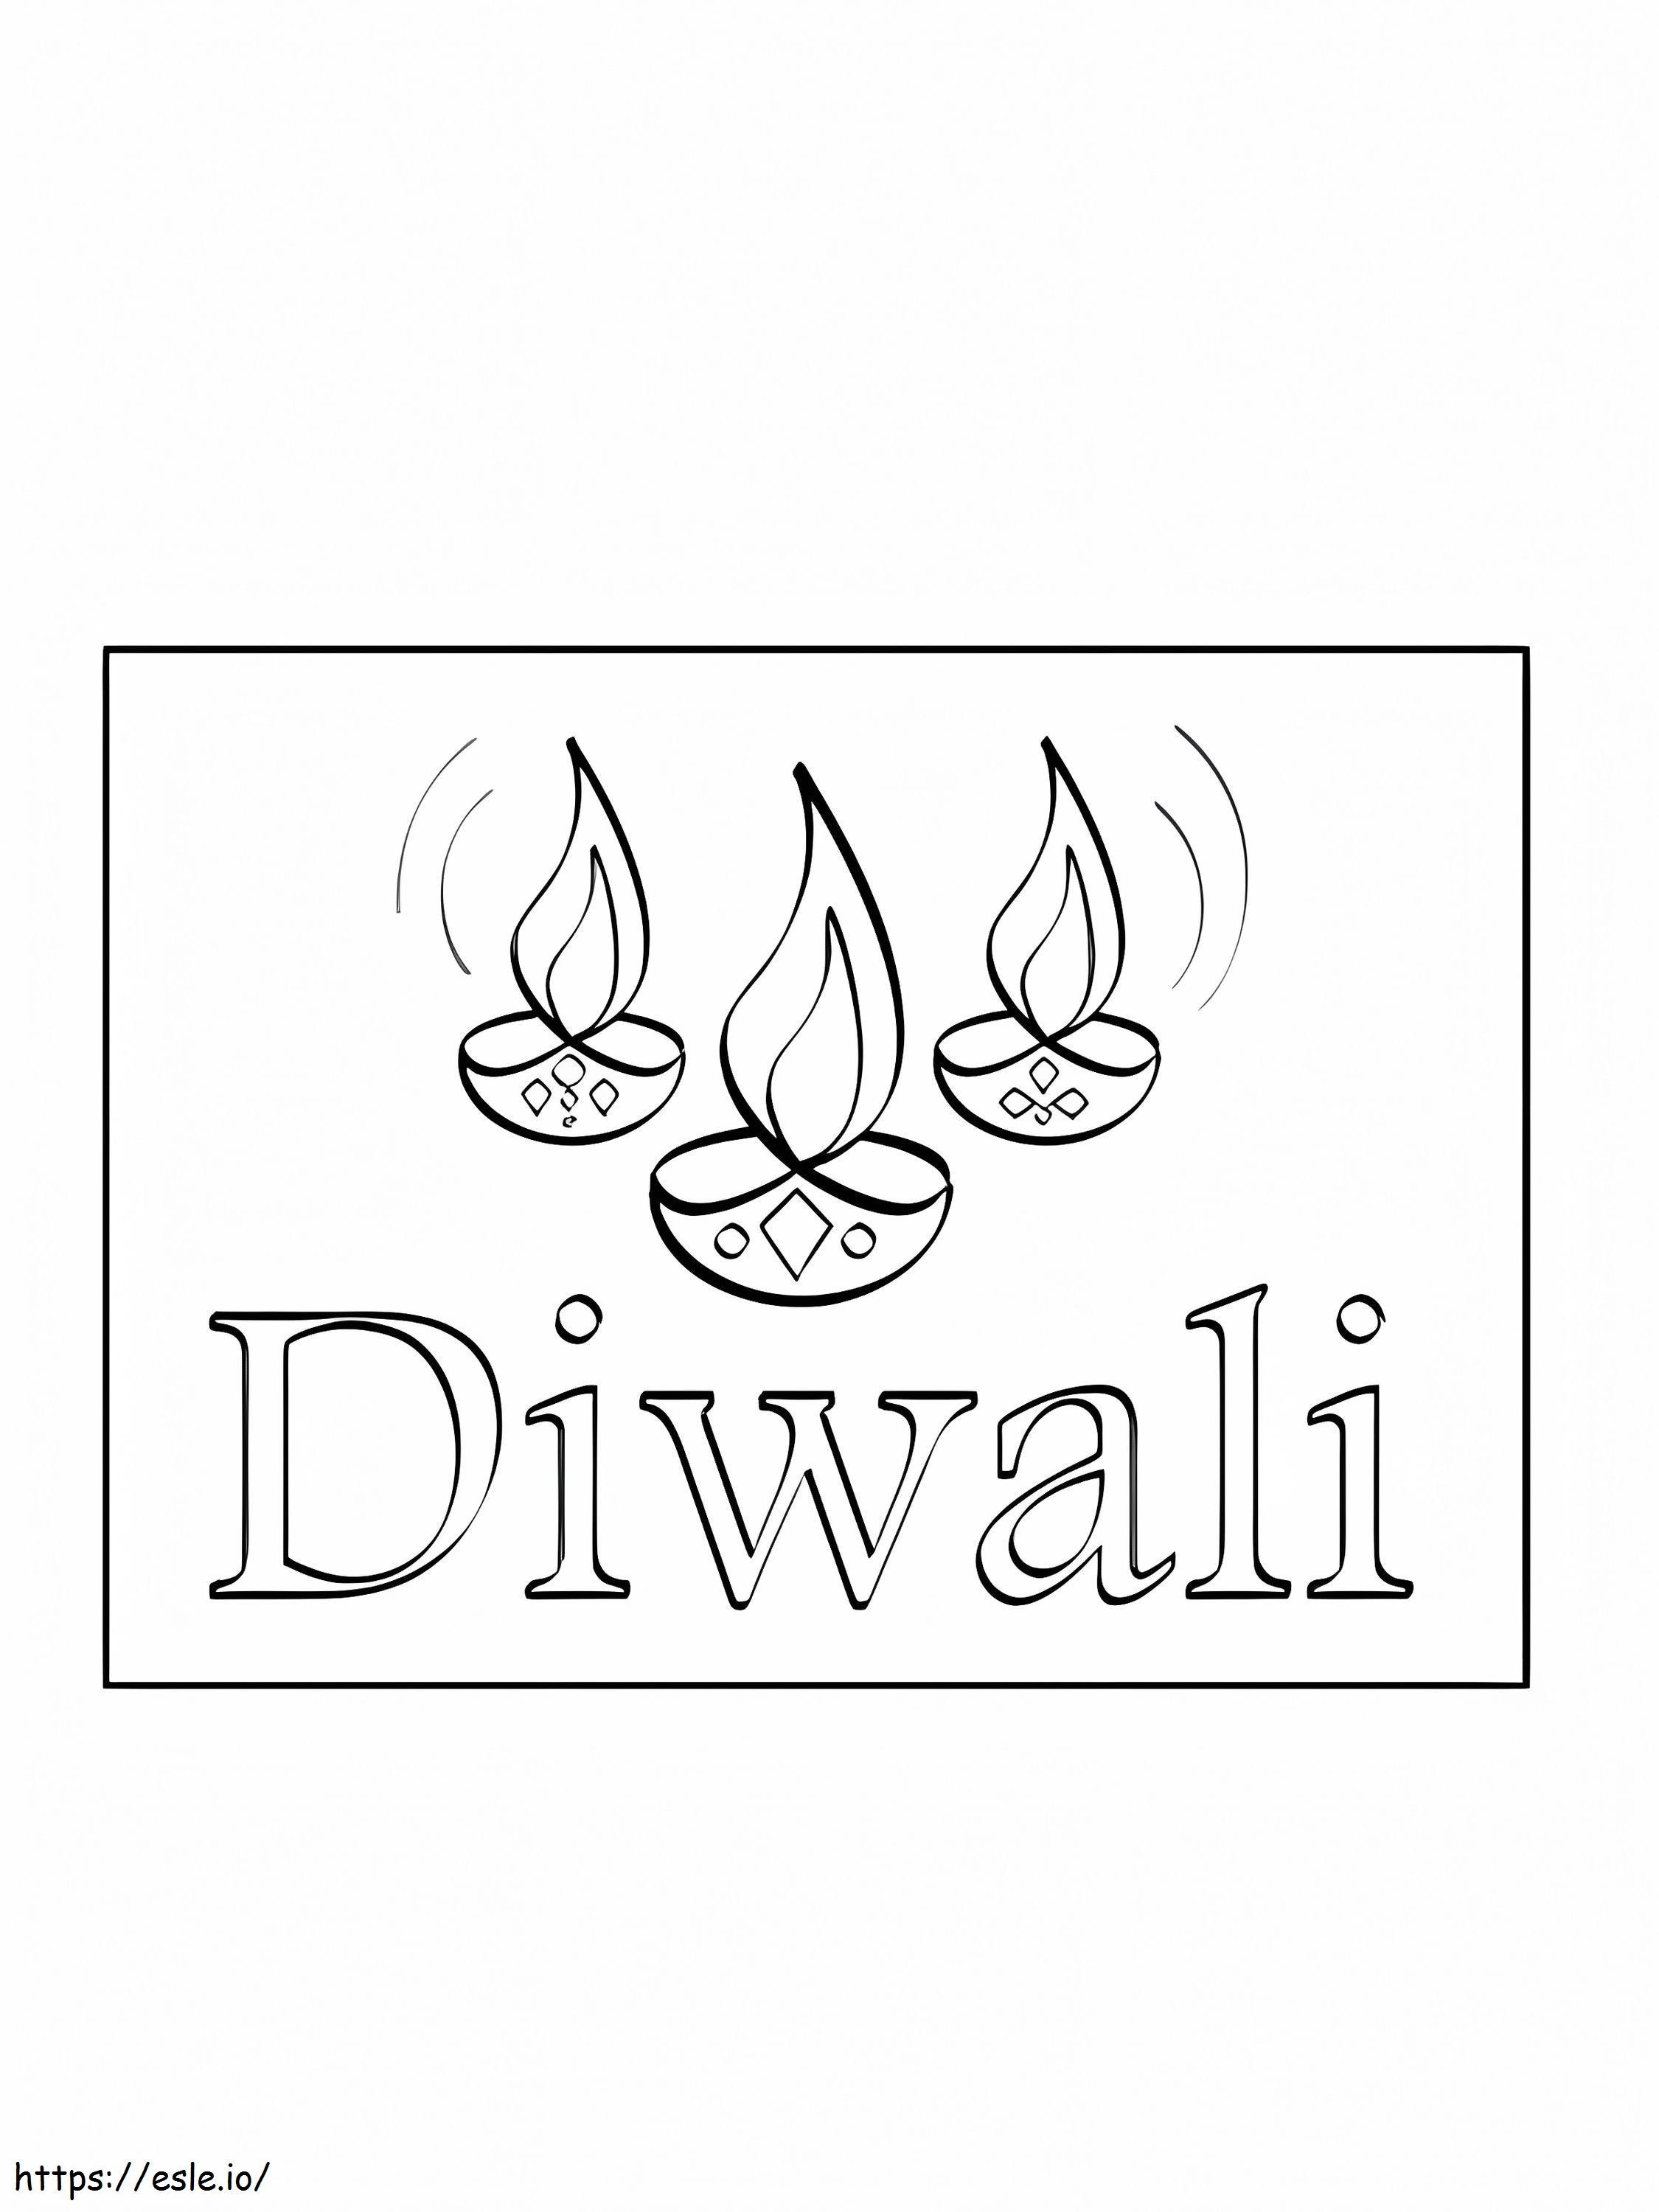 Diwali 5 coloring page